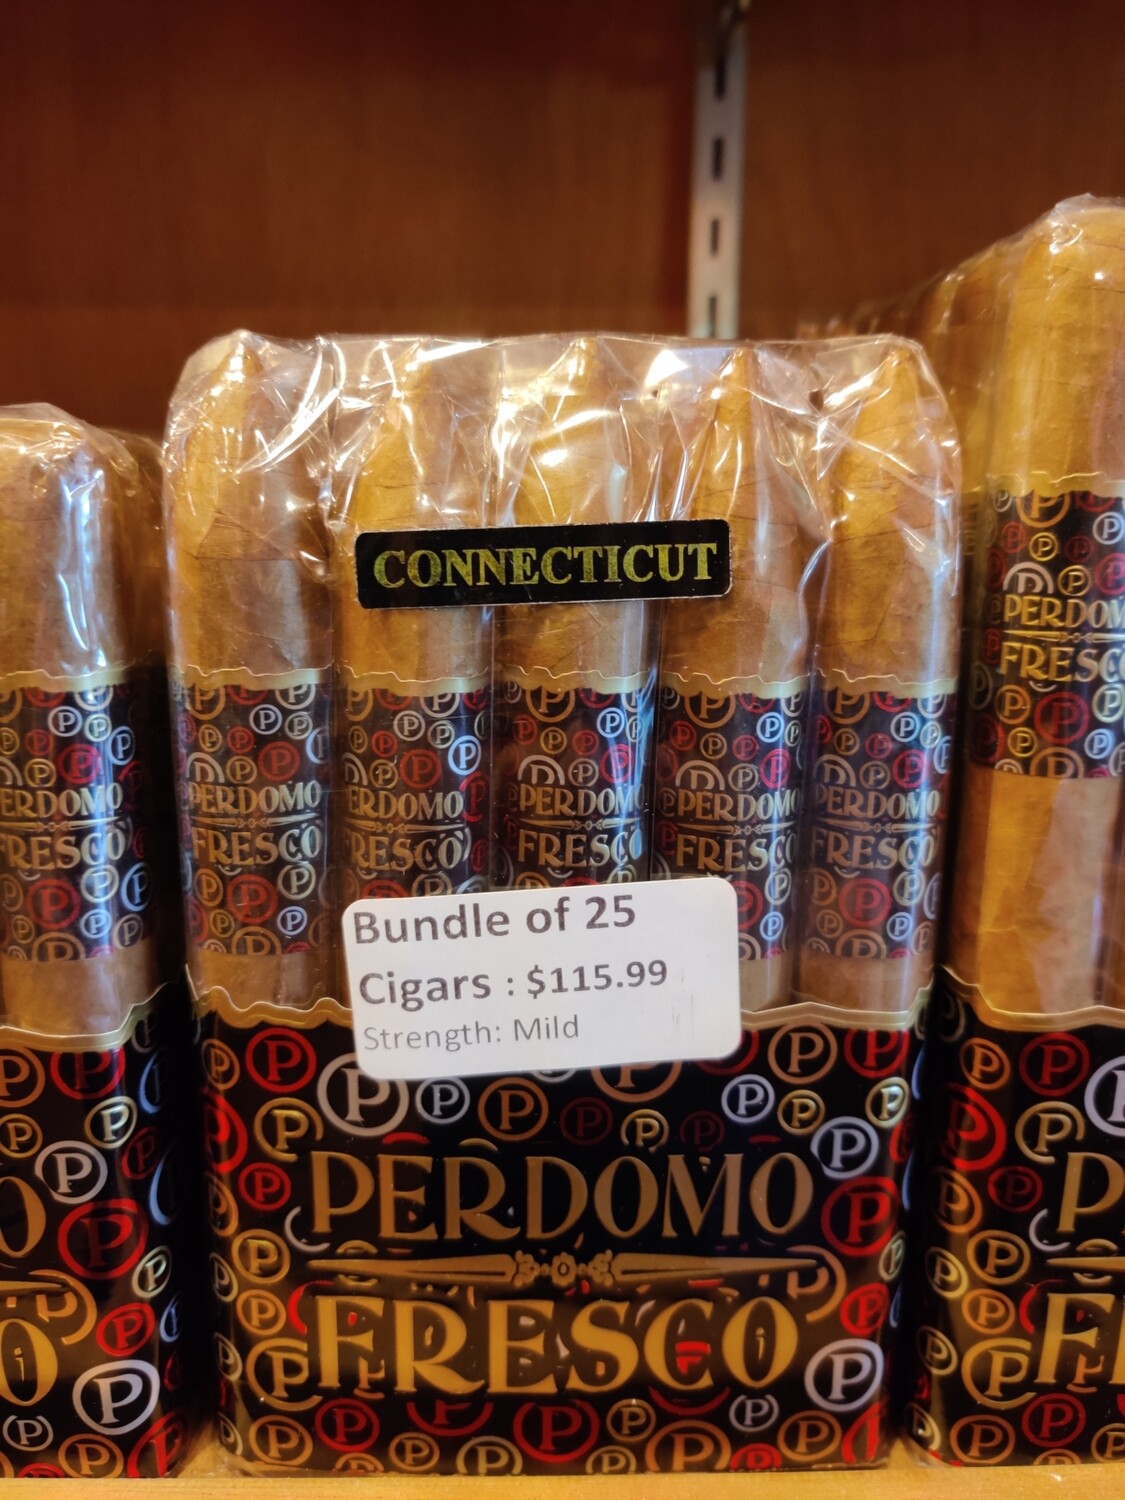 Perdomo Fresco Torpedo Connecticut 25 Cigar Bundle